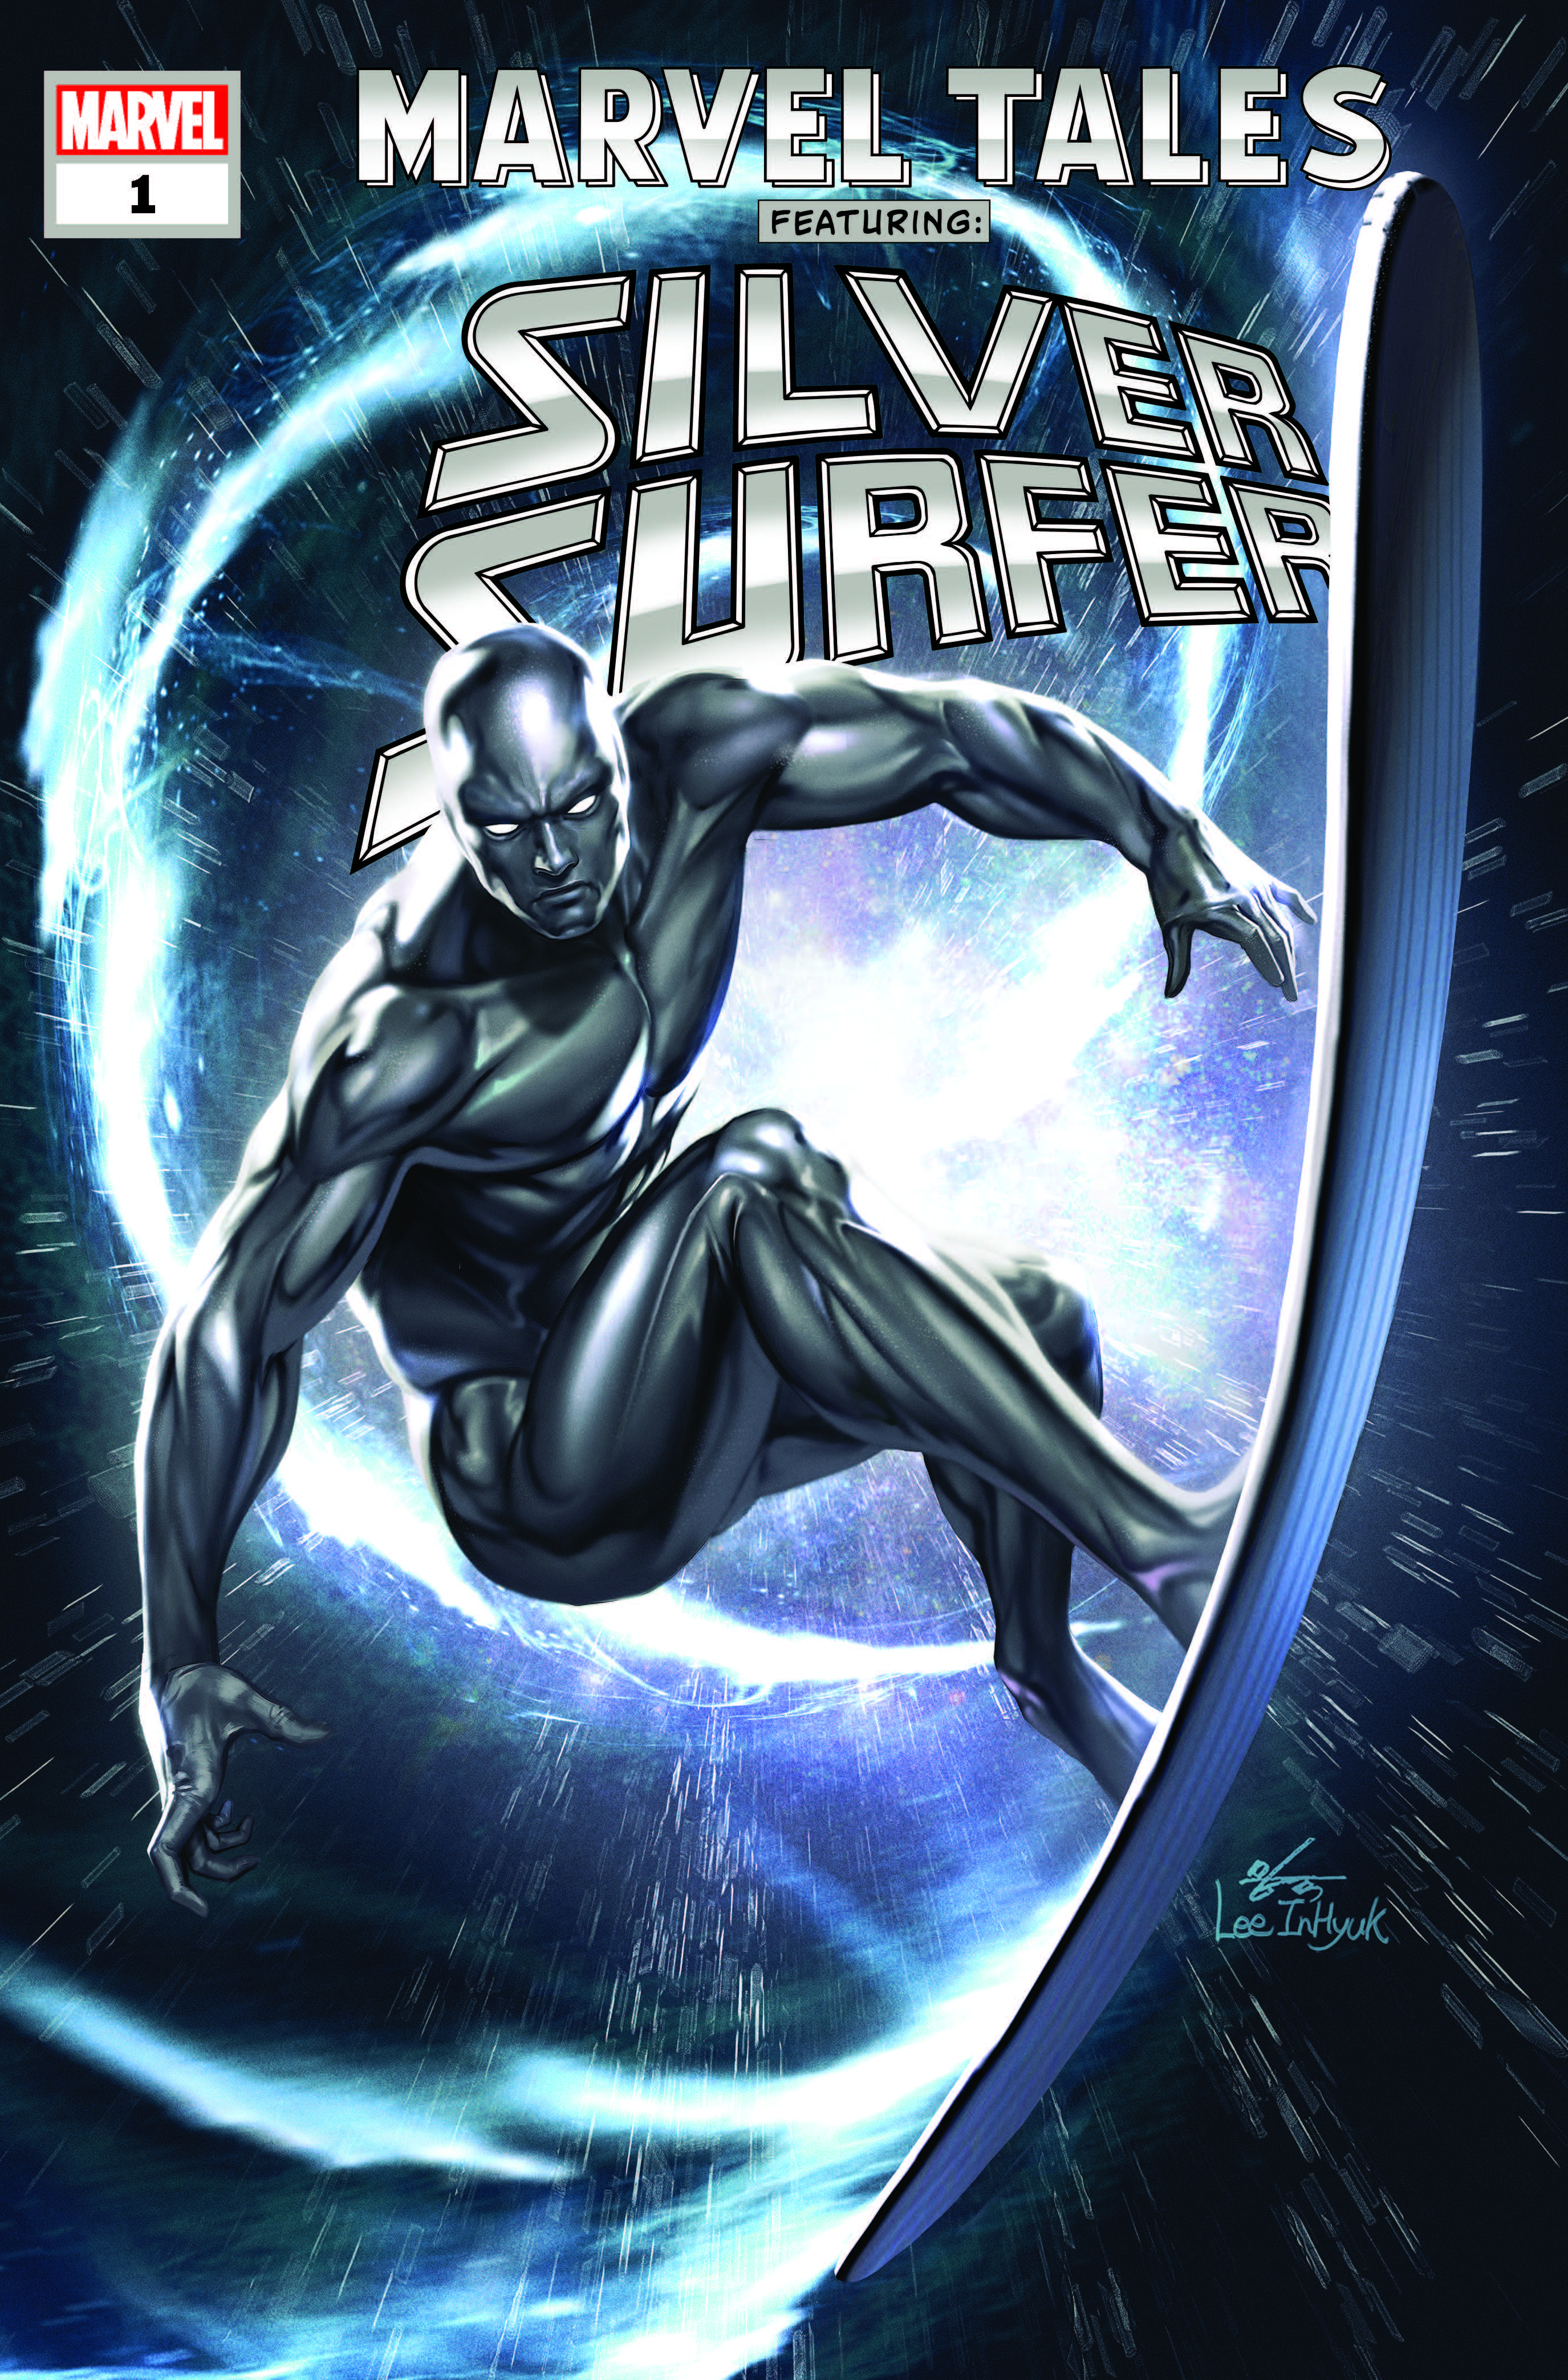 Marvel Tales Silver Surfer #1